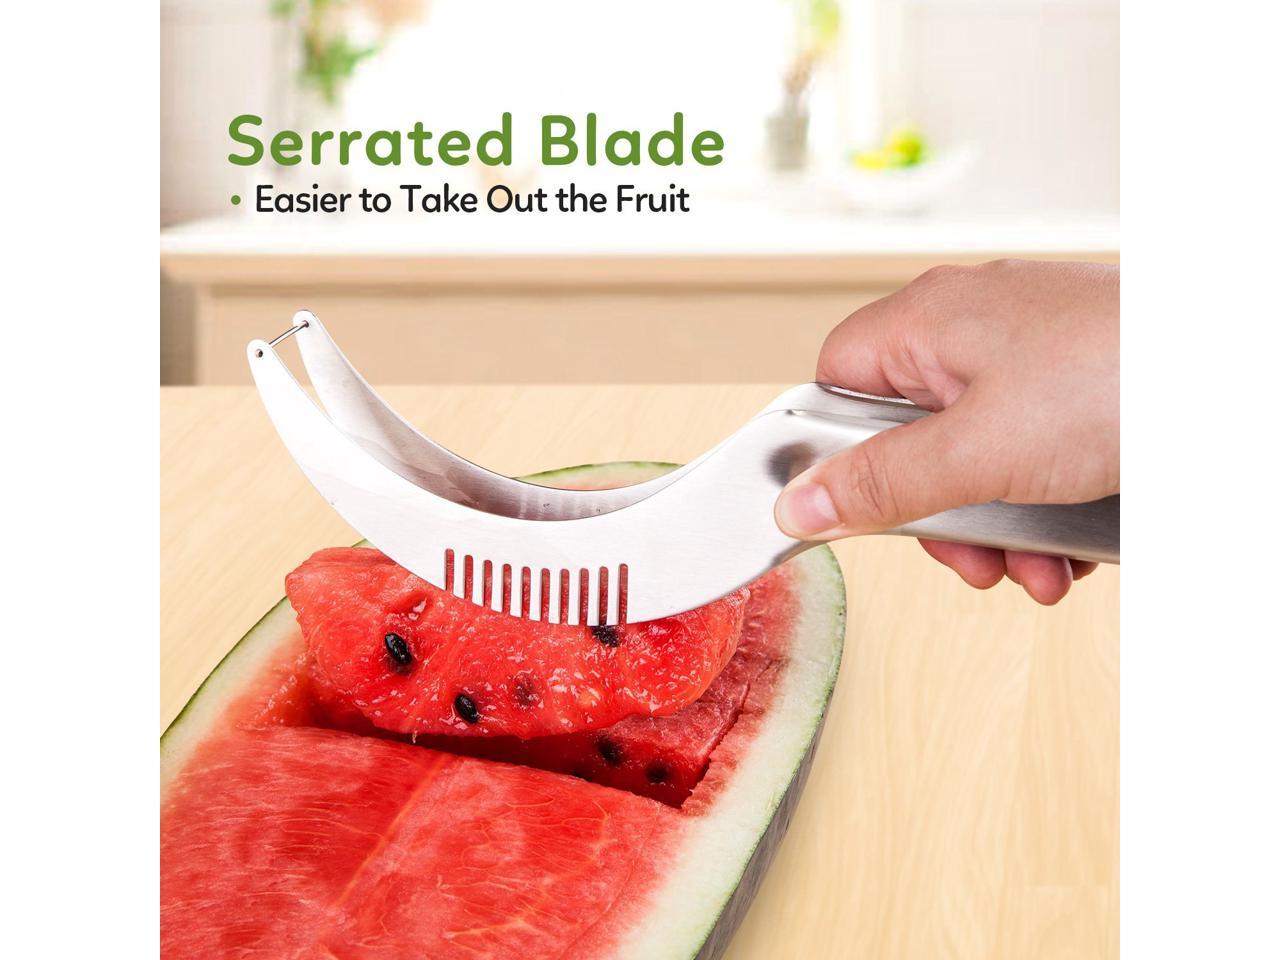 Watermelon Slicer Cutter Knife Tongs Corer Fruit Melon Stainless